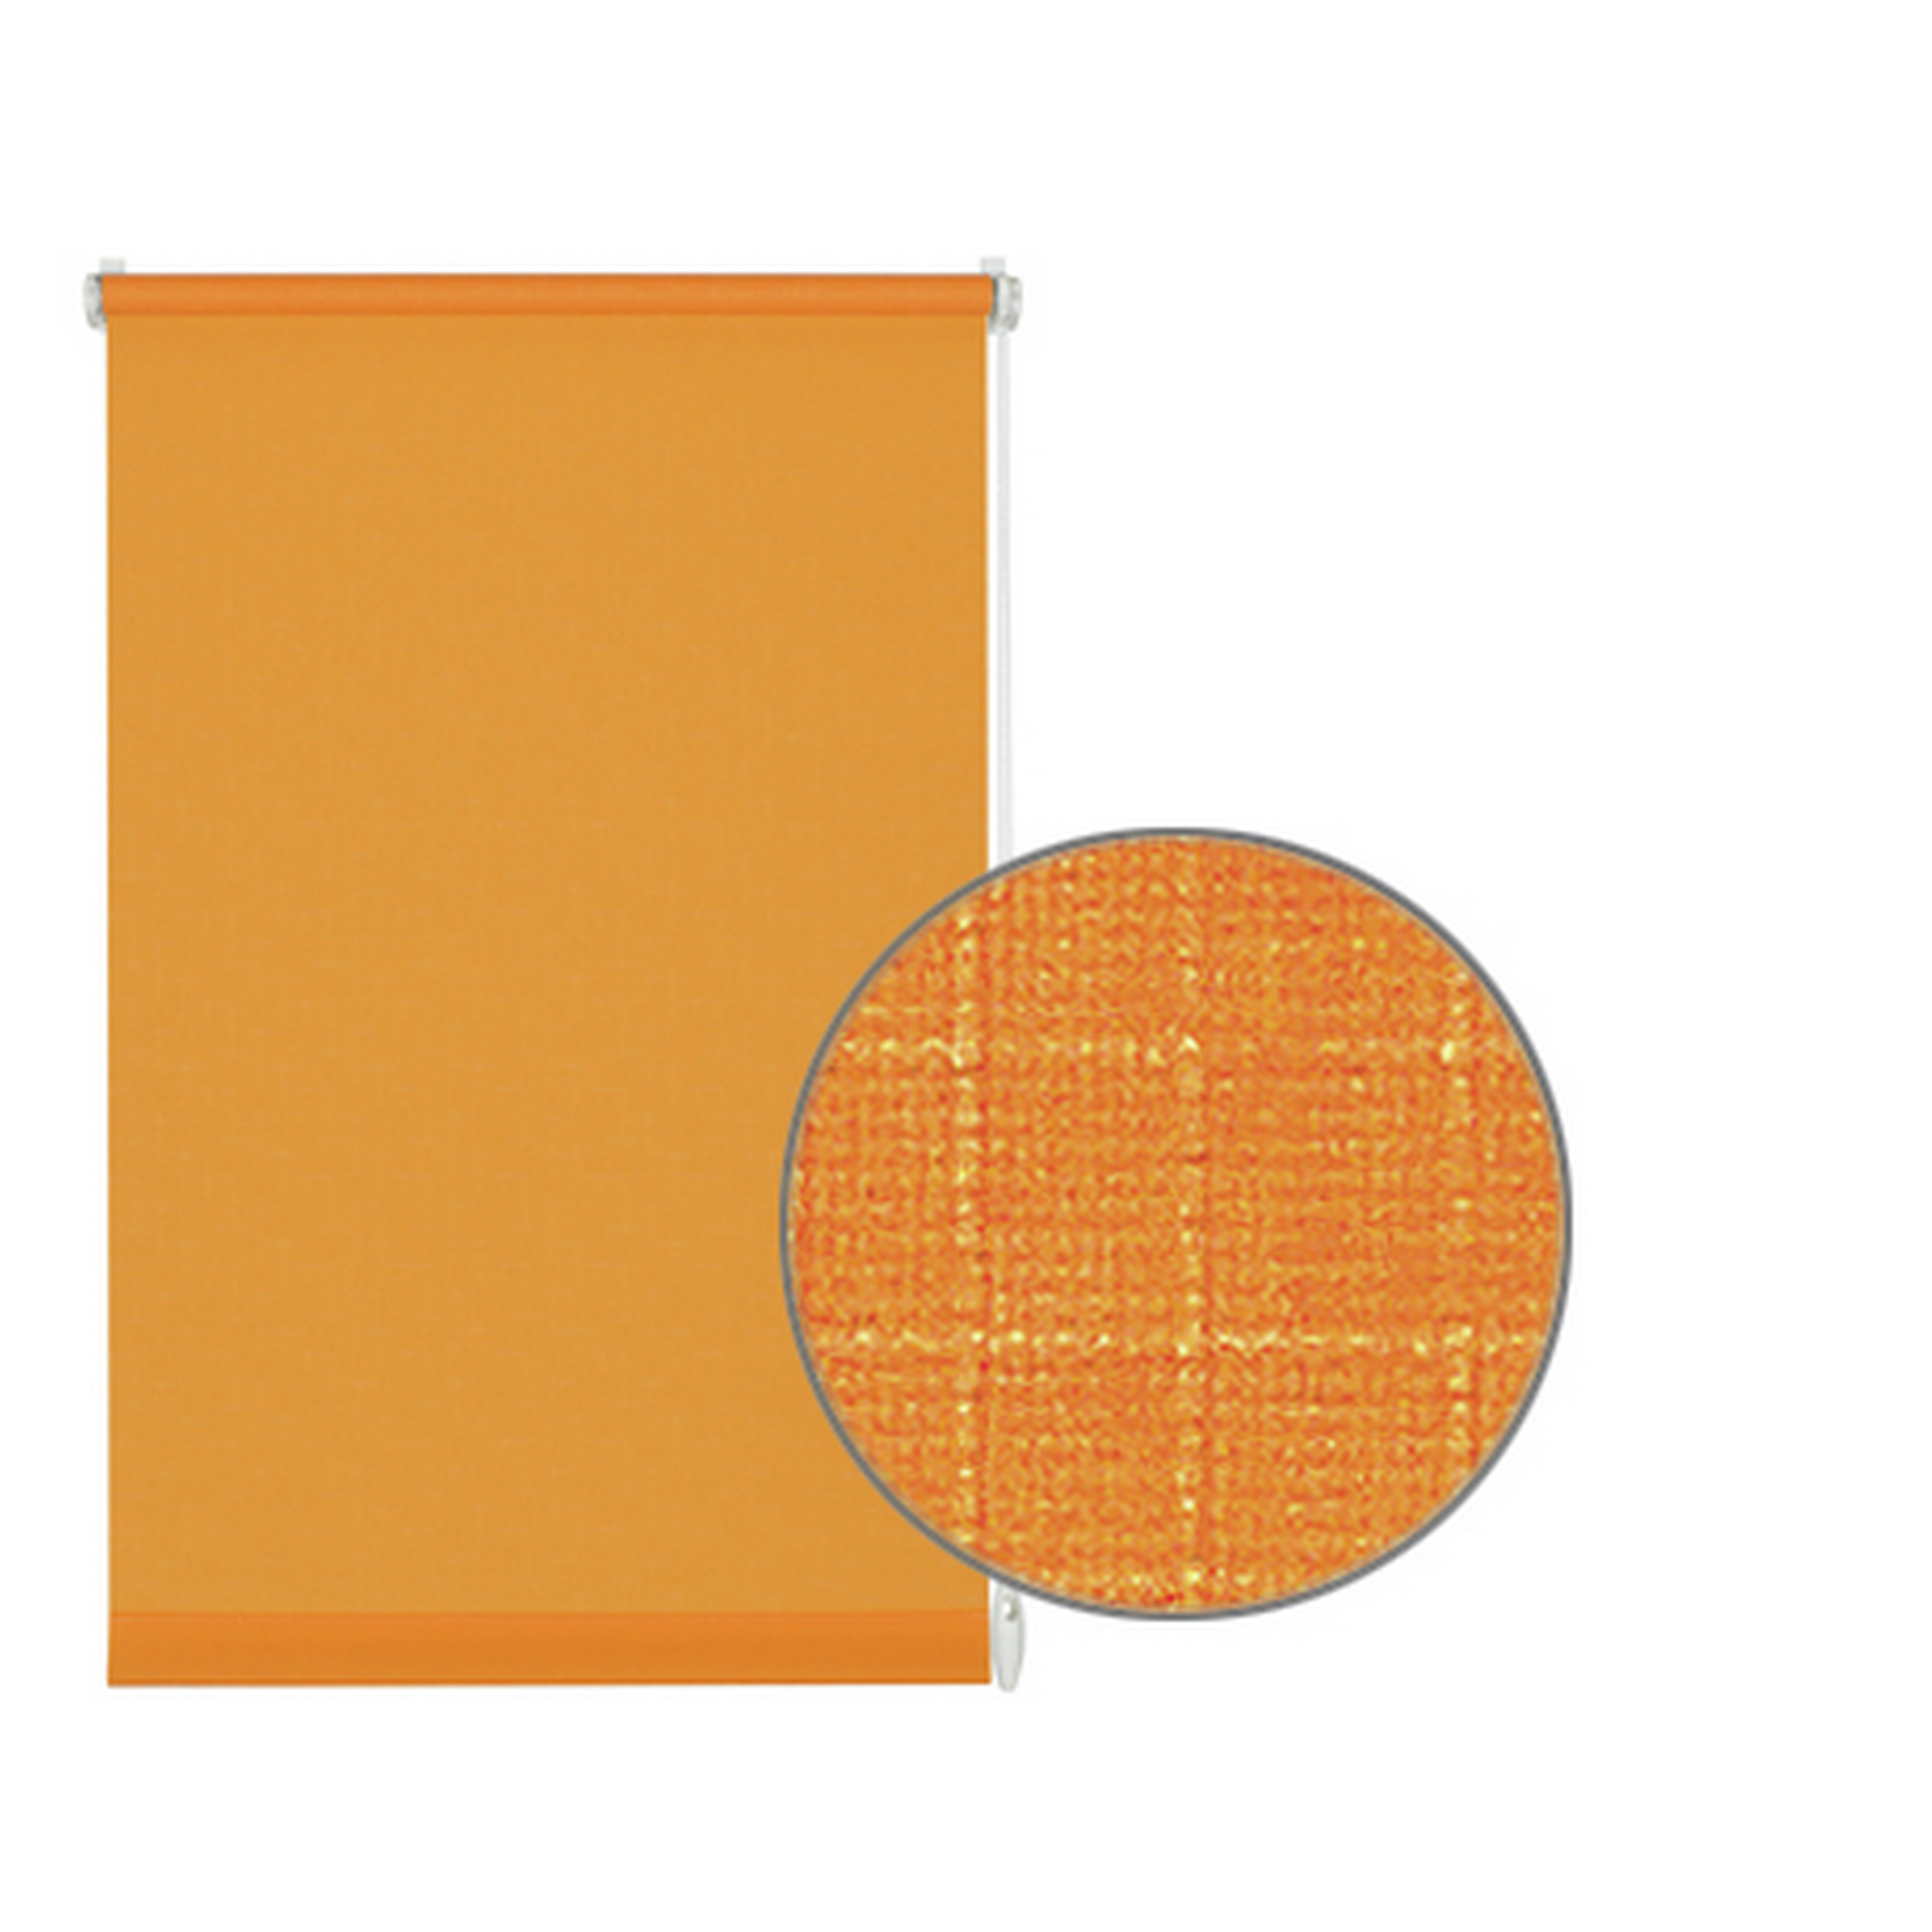 EasyFix Rollo 'Uni' orange 120 x 150 cm + product picture